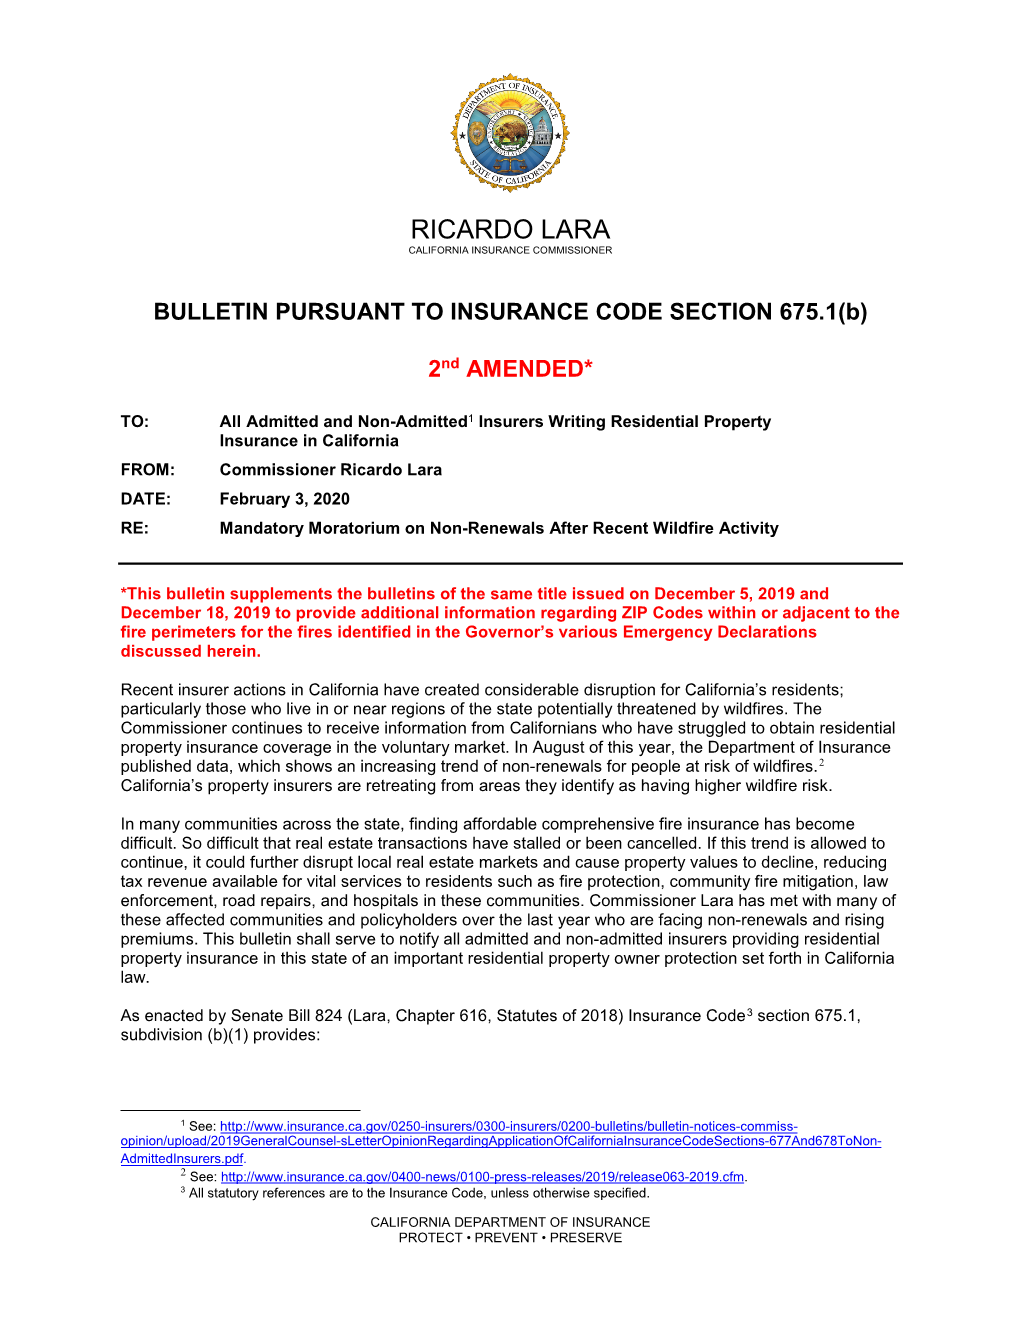 Bulletin 2020-1 Mandatory Moratorium on Residential Non-Renewals